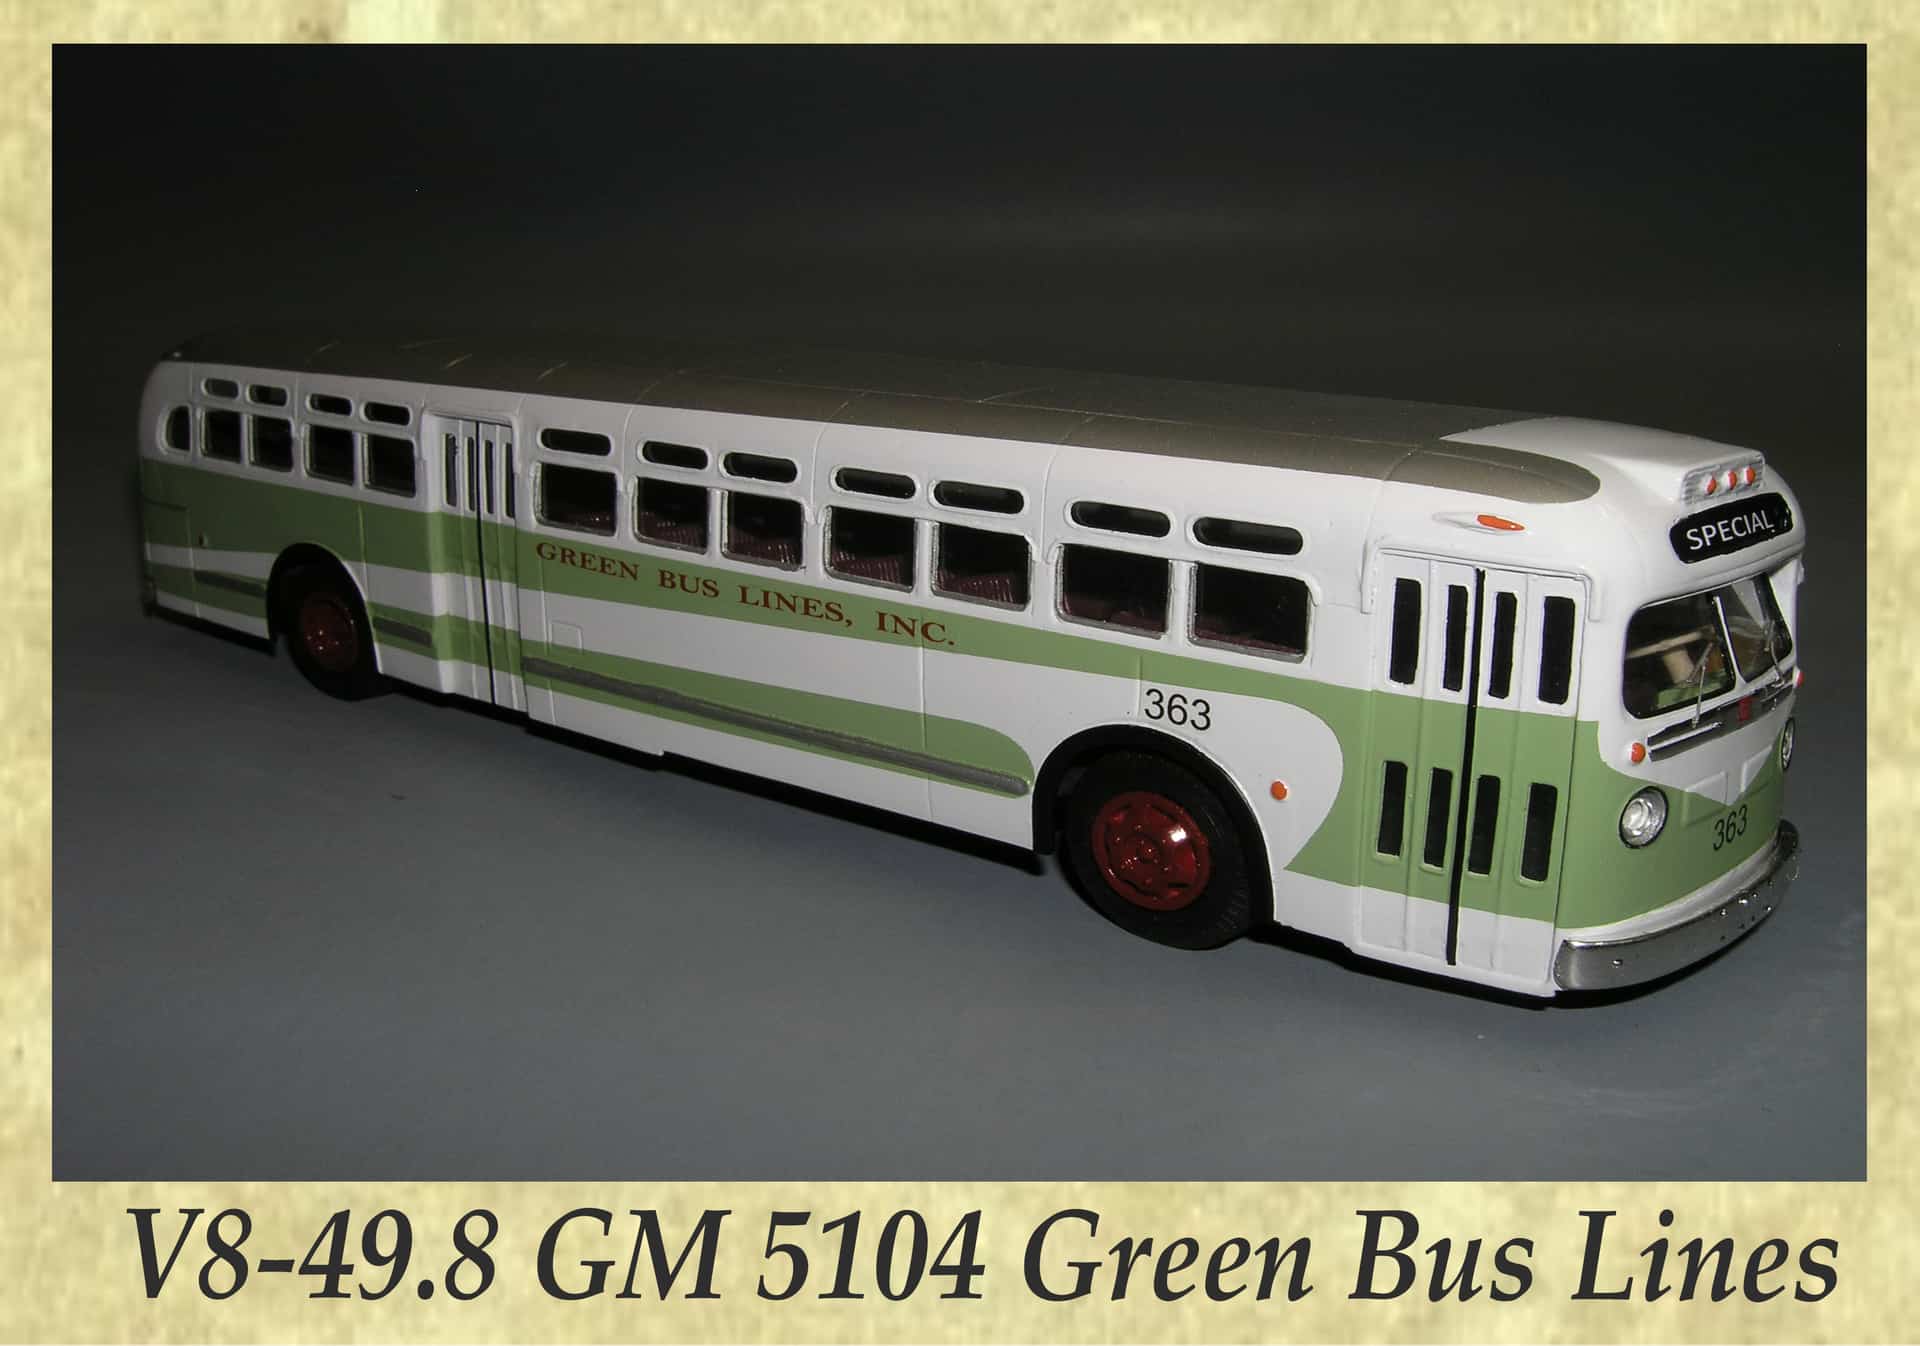 V8-49.8 GM 5104 Green Bus Lines